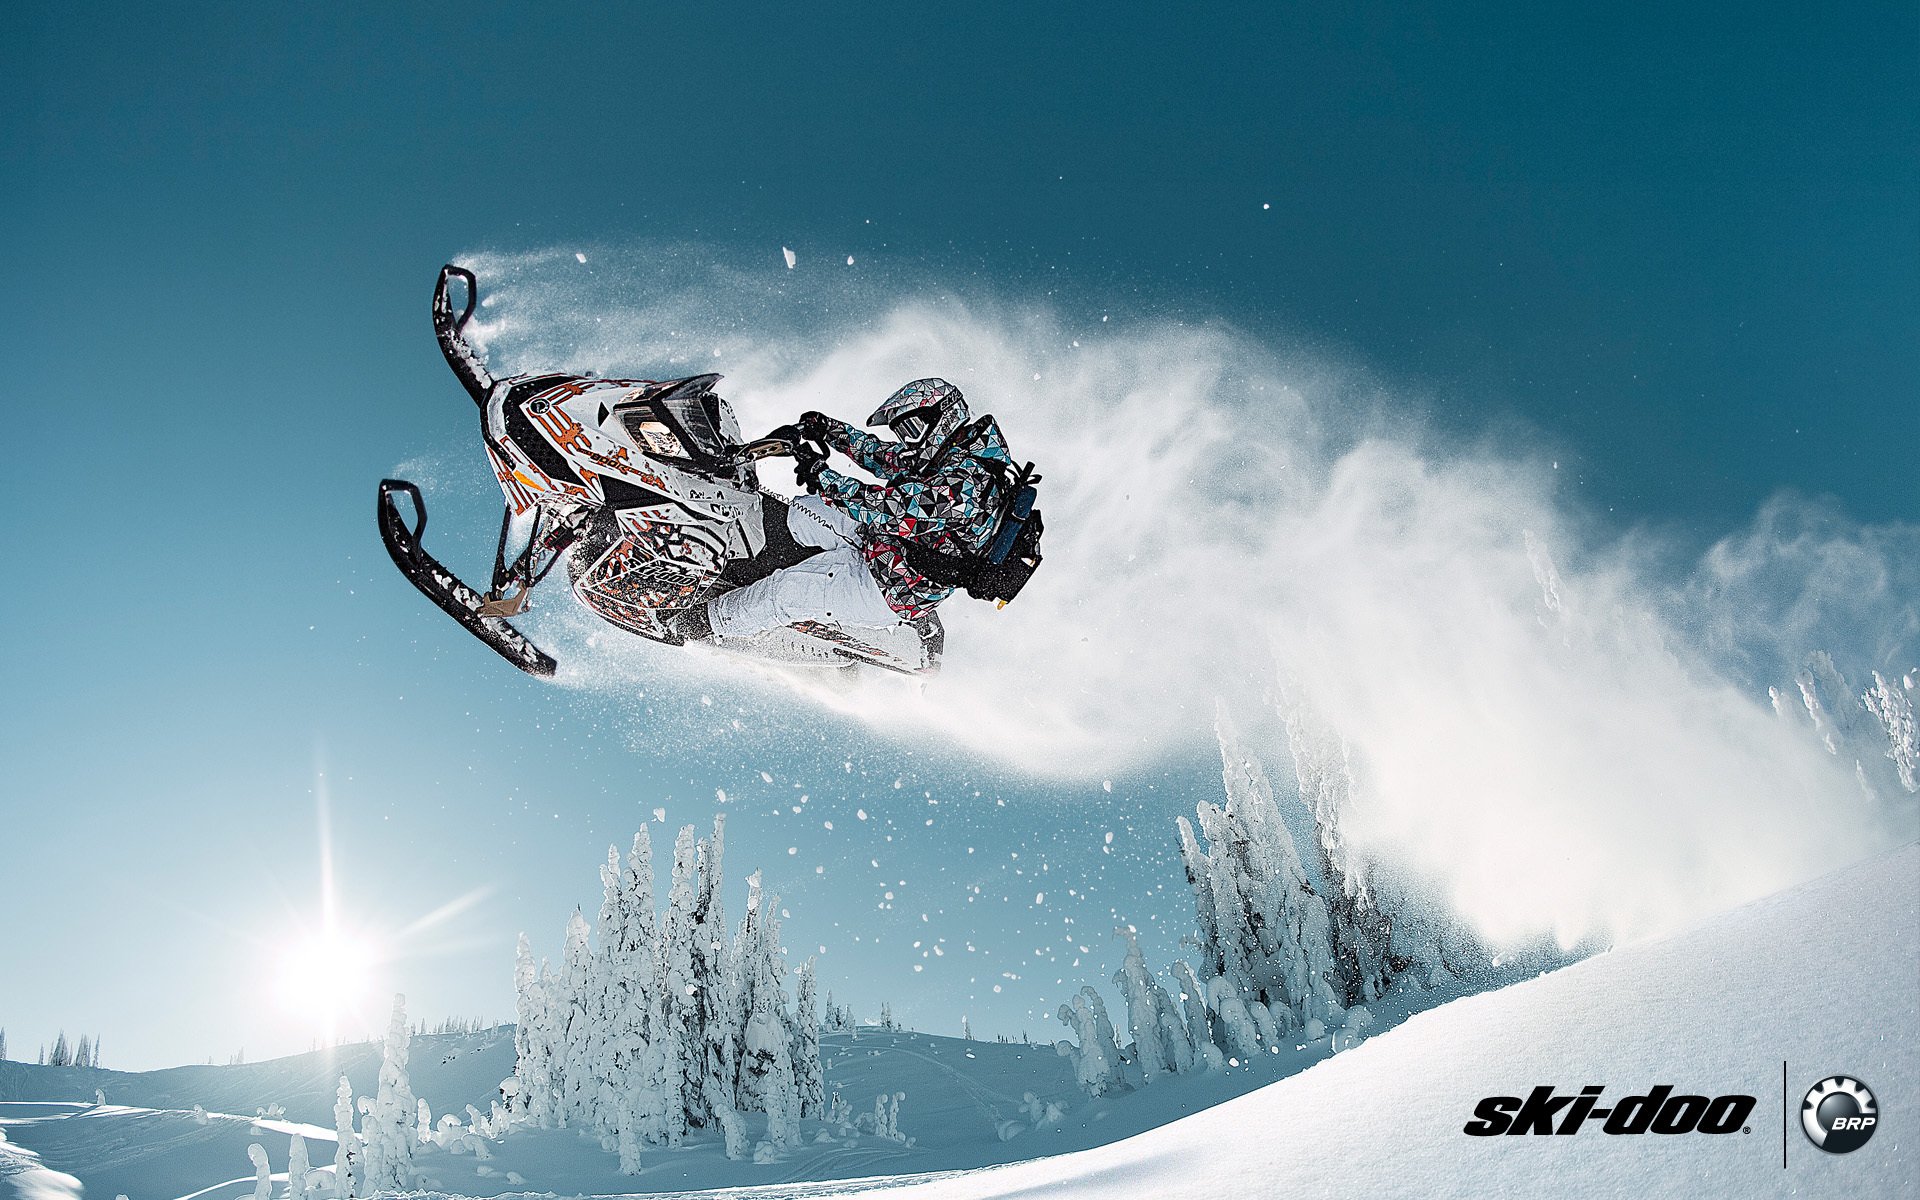 ski-doo снегоход фрирайда brp прыжок лес снег спорт